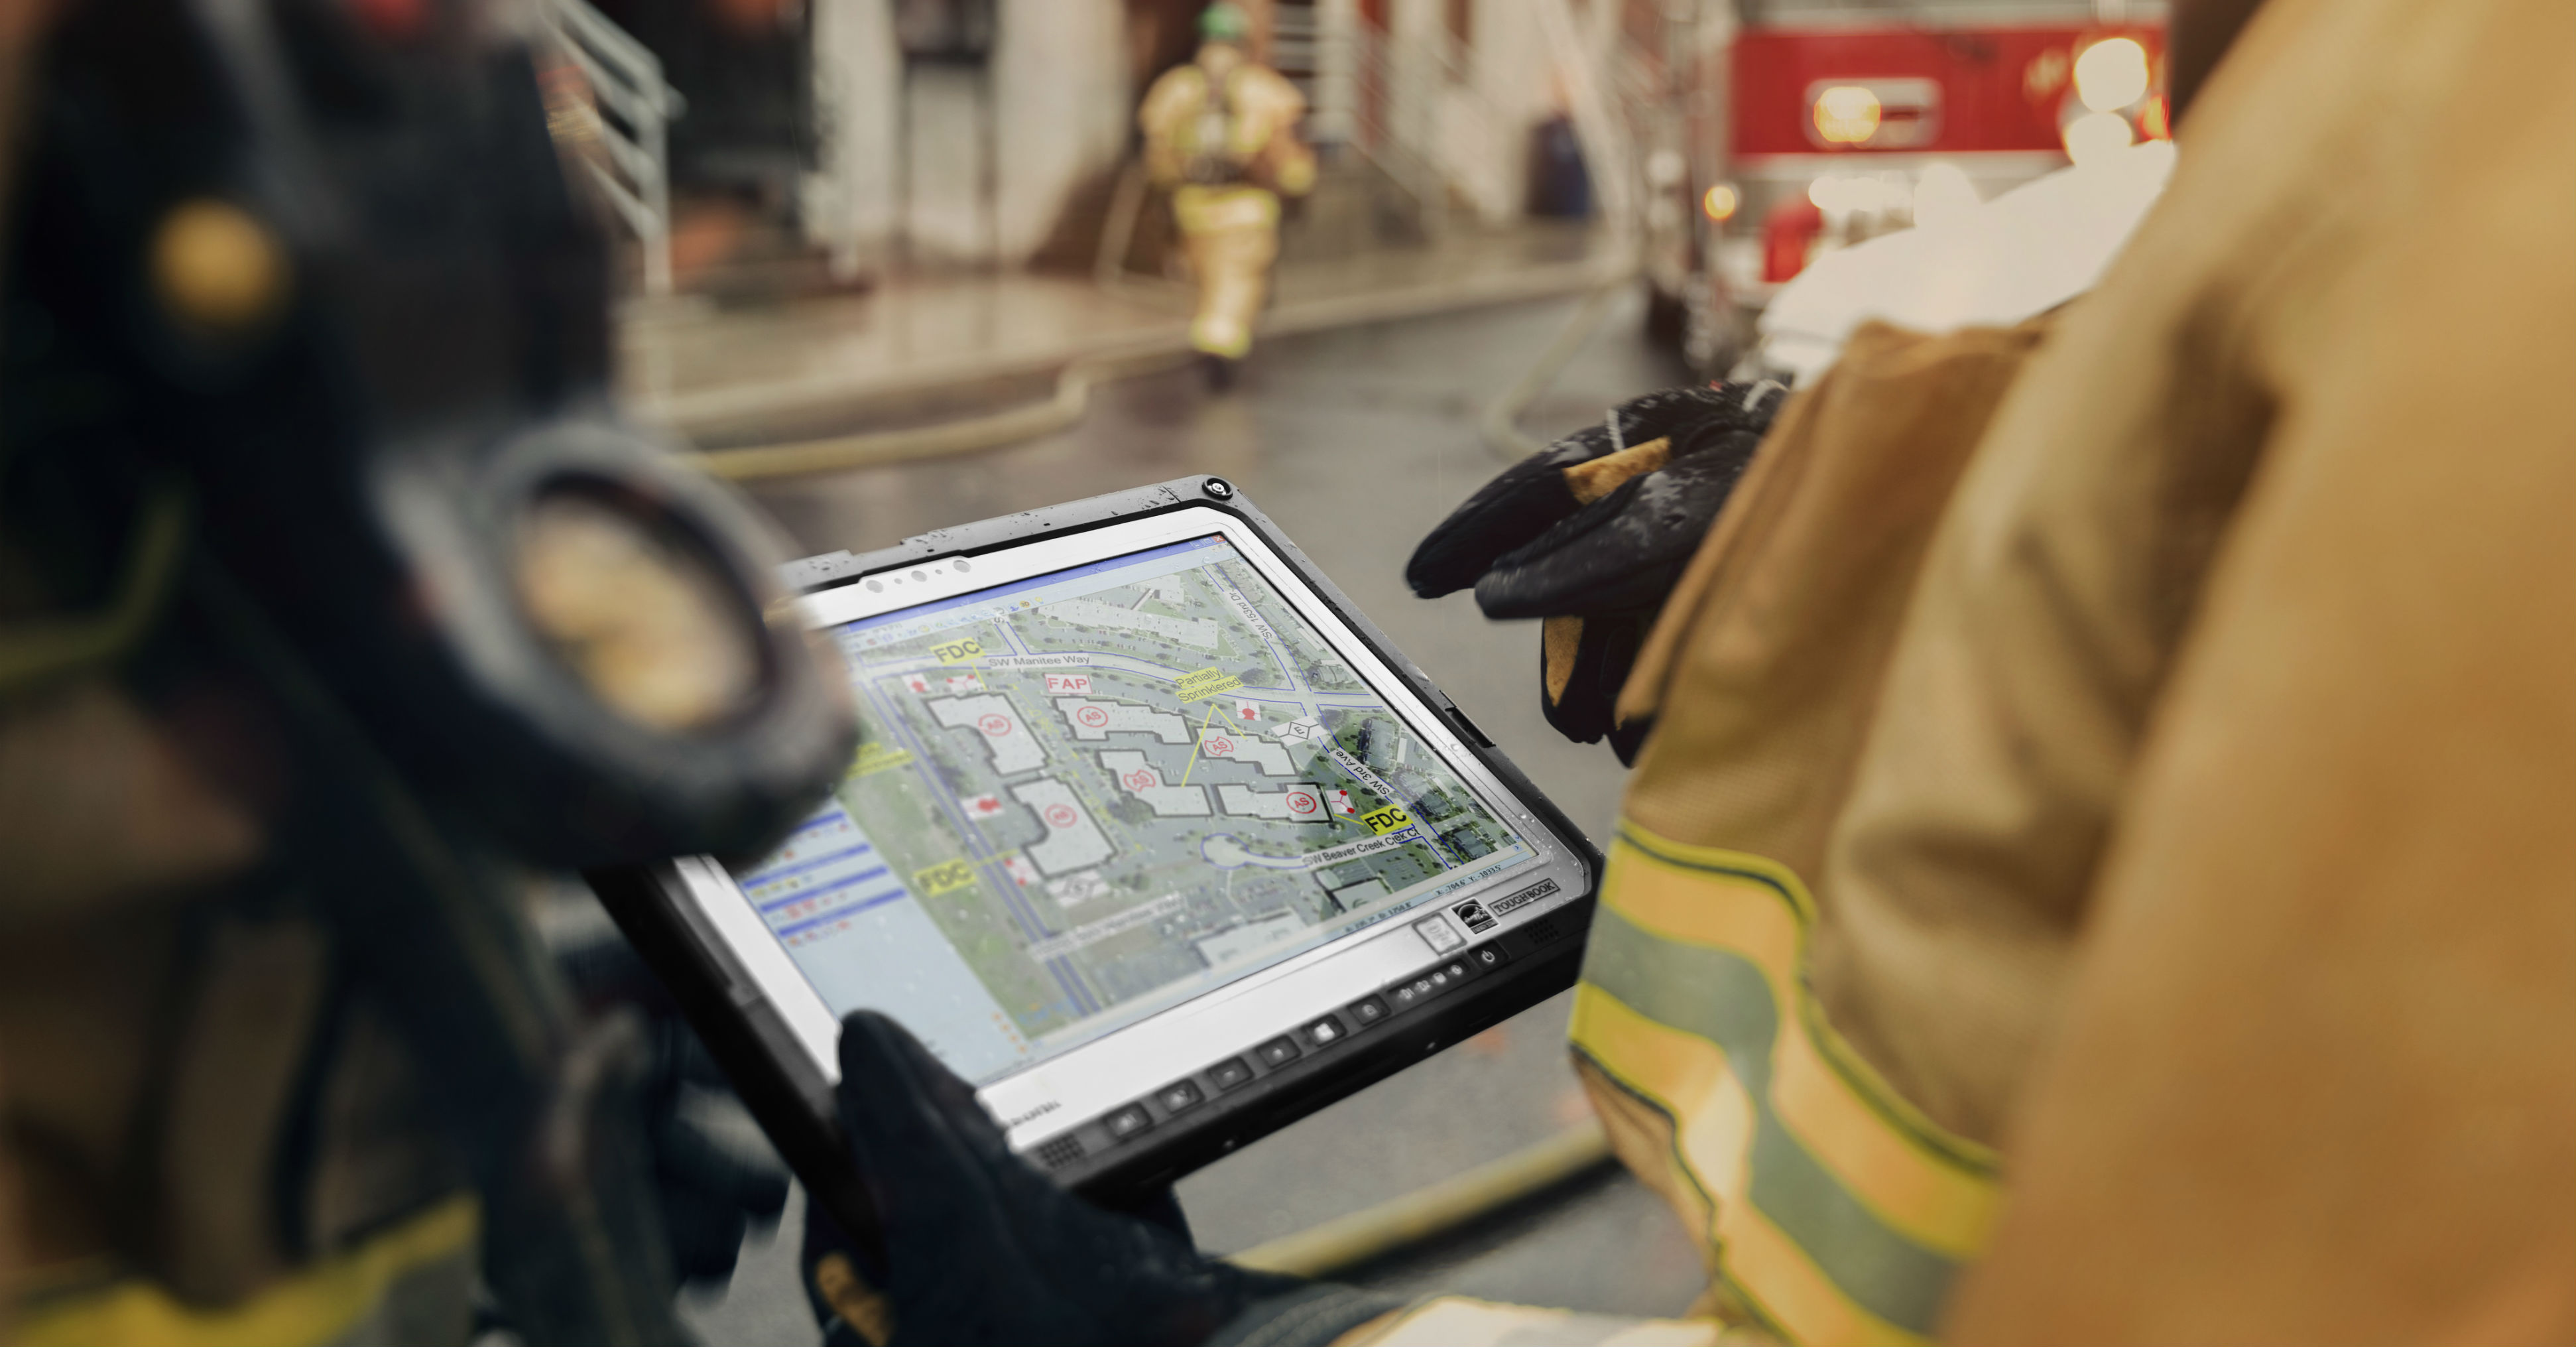 An emergency worker a rugged laptop as part of their firefighter gear